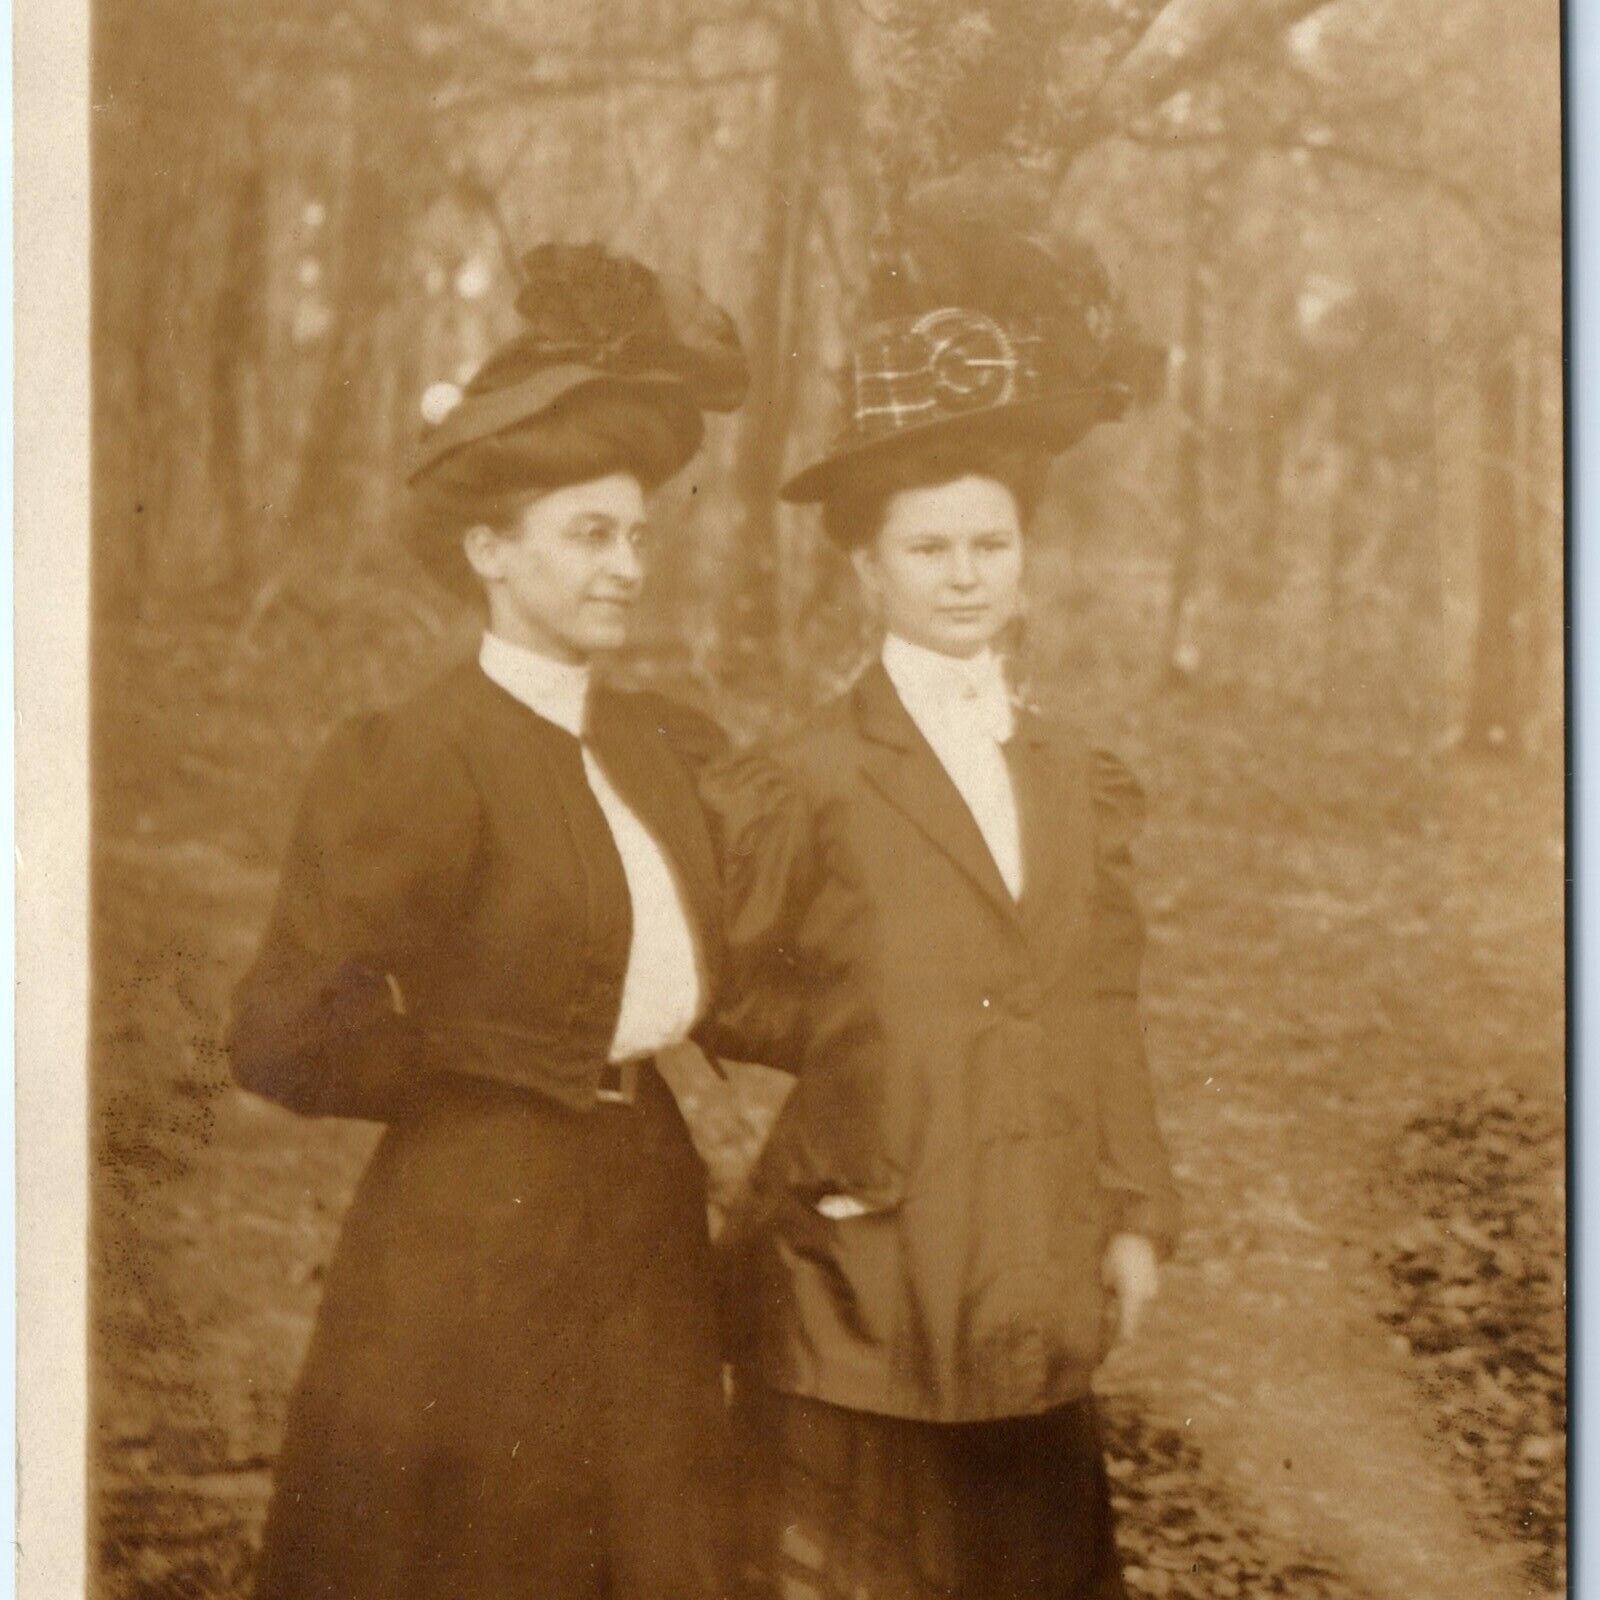 ID'd c1910s Beautiful Women Lady Woods RPPC Hats Real Photo Ethel C Bingham A140